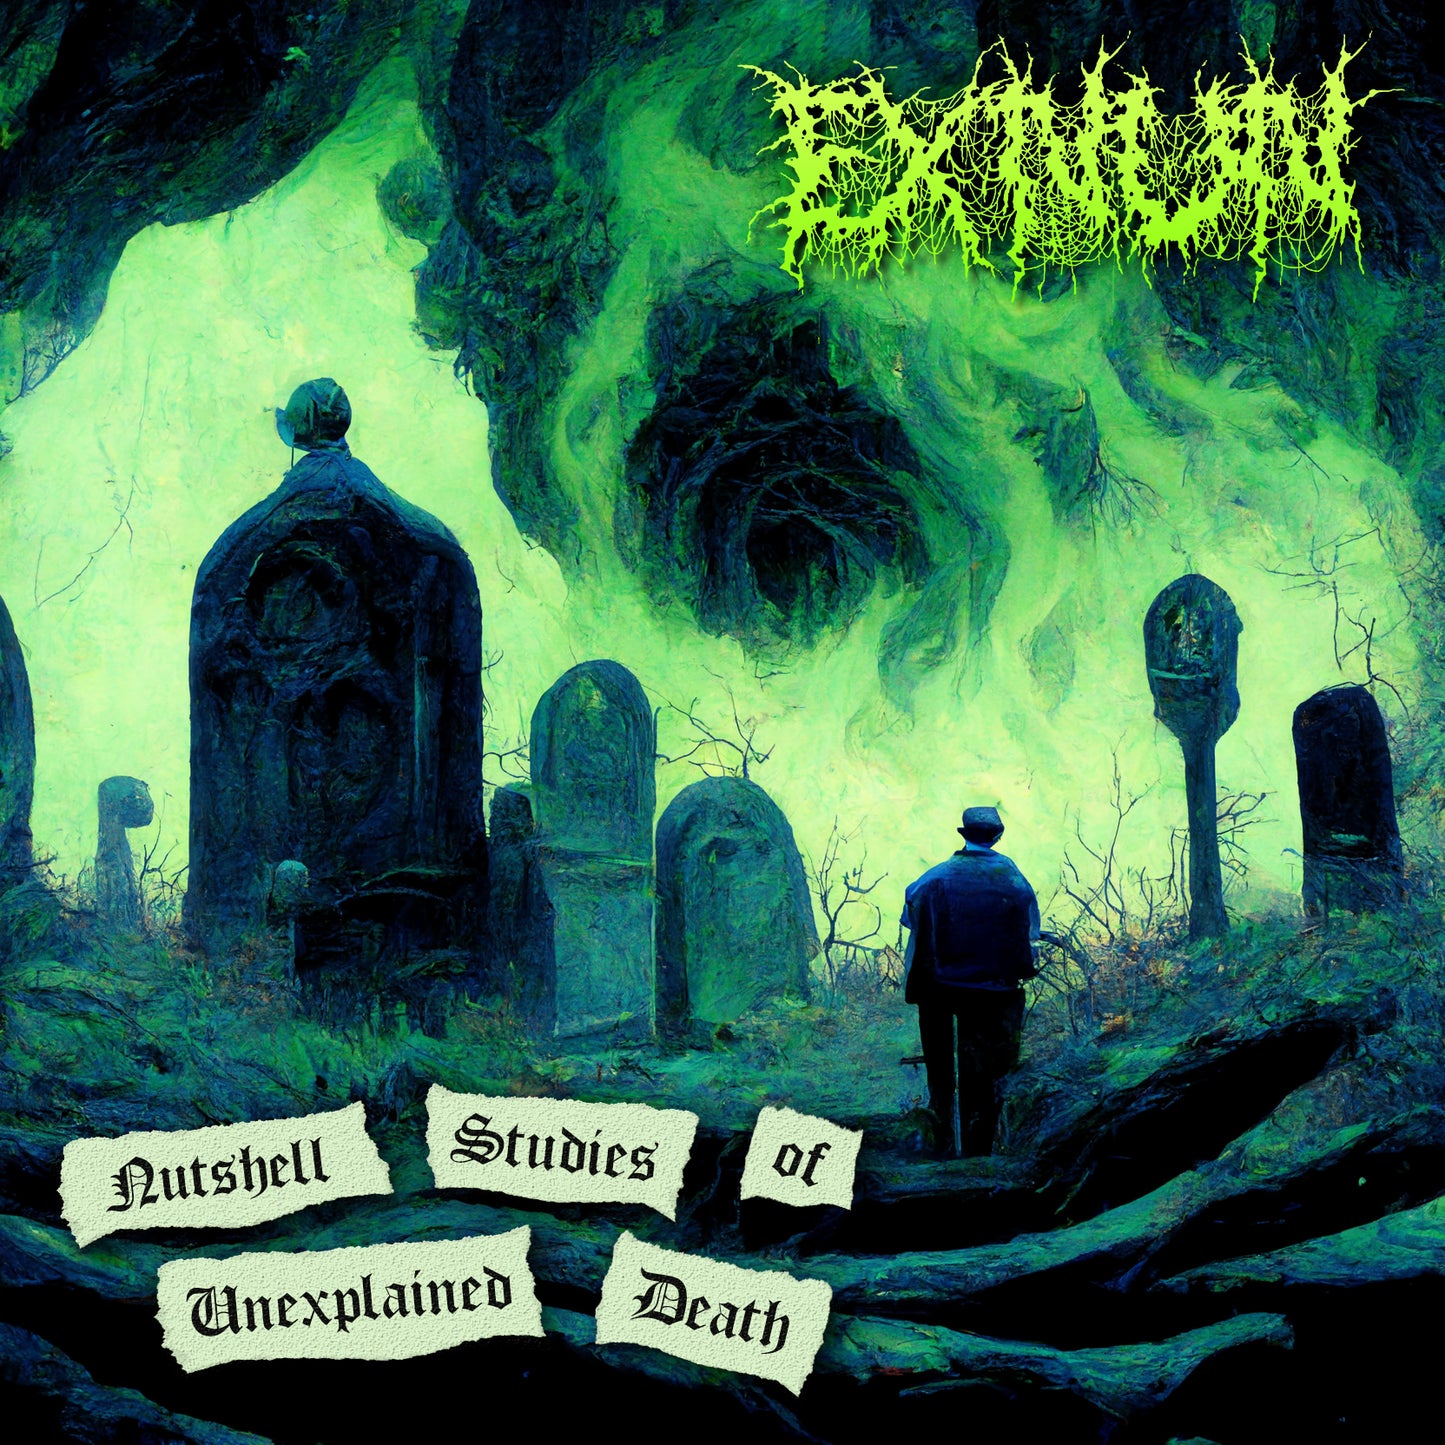 Exnun "Nutshell Studies of Unexplained Death" CD